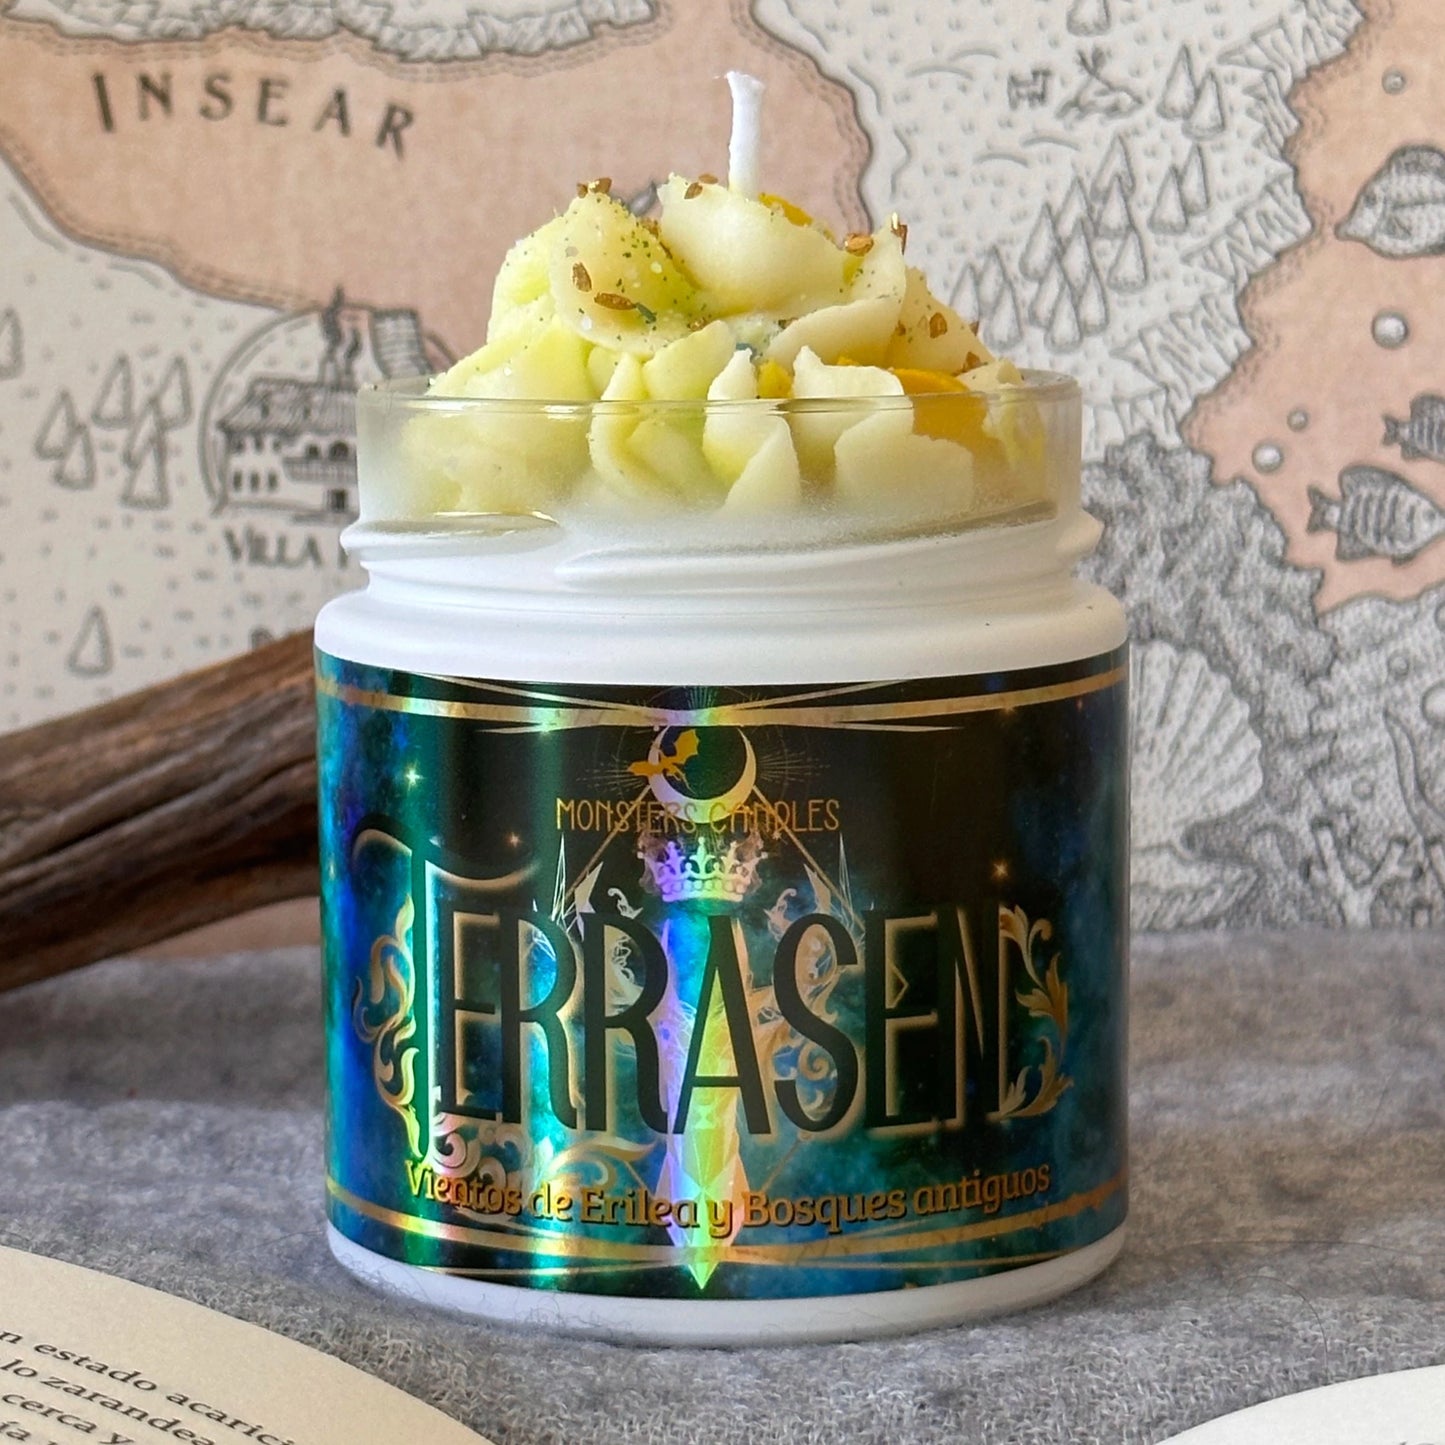 Vela “Terrasen” Trono de Cristal - Monsters Candles ® - Velas Literarias artesanas de soja 100% ecológica